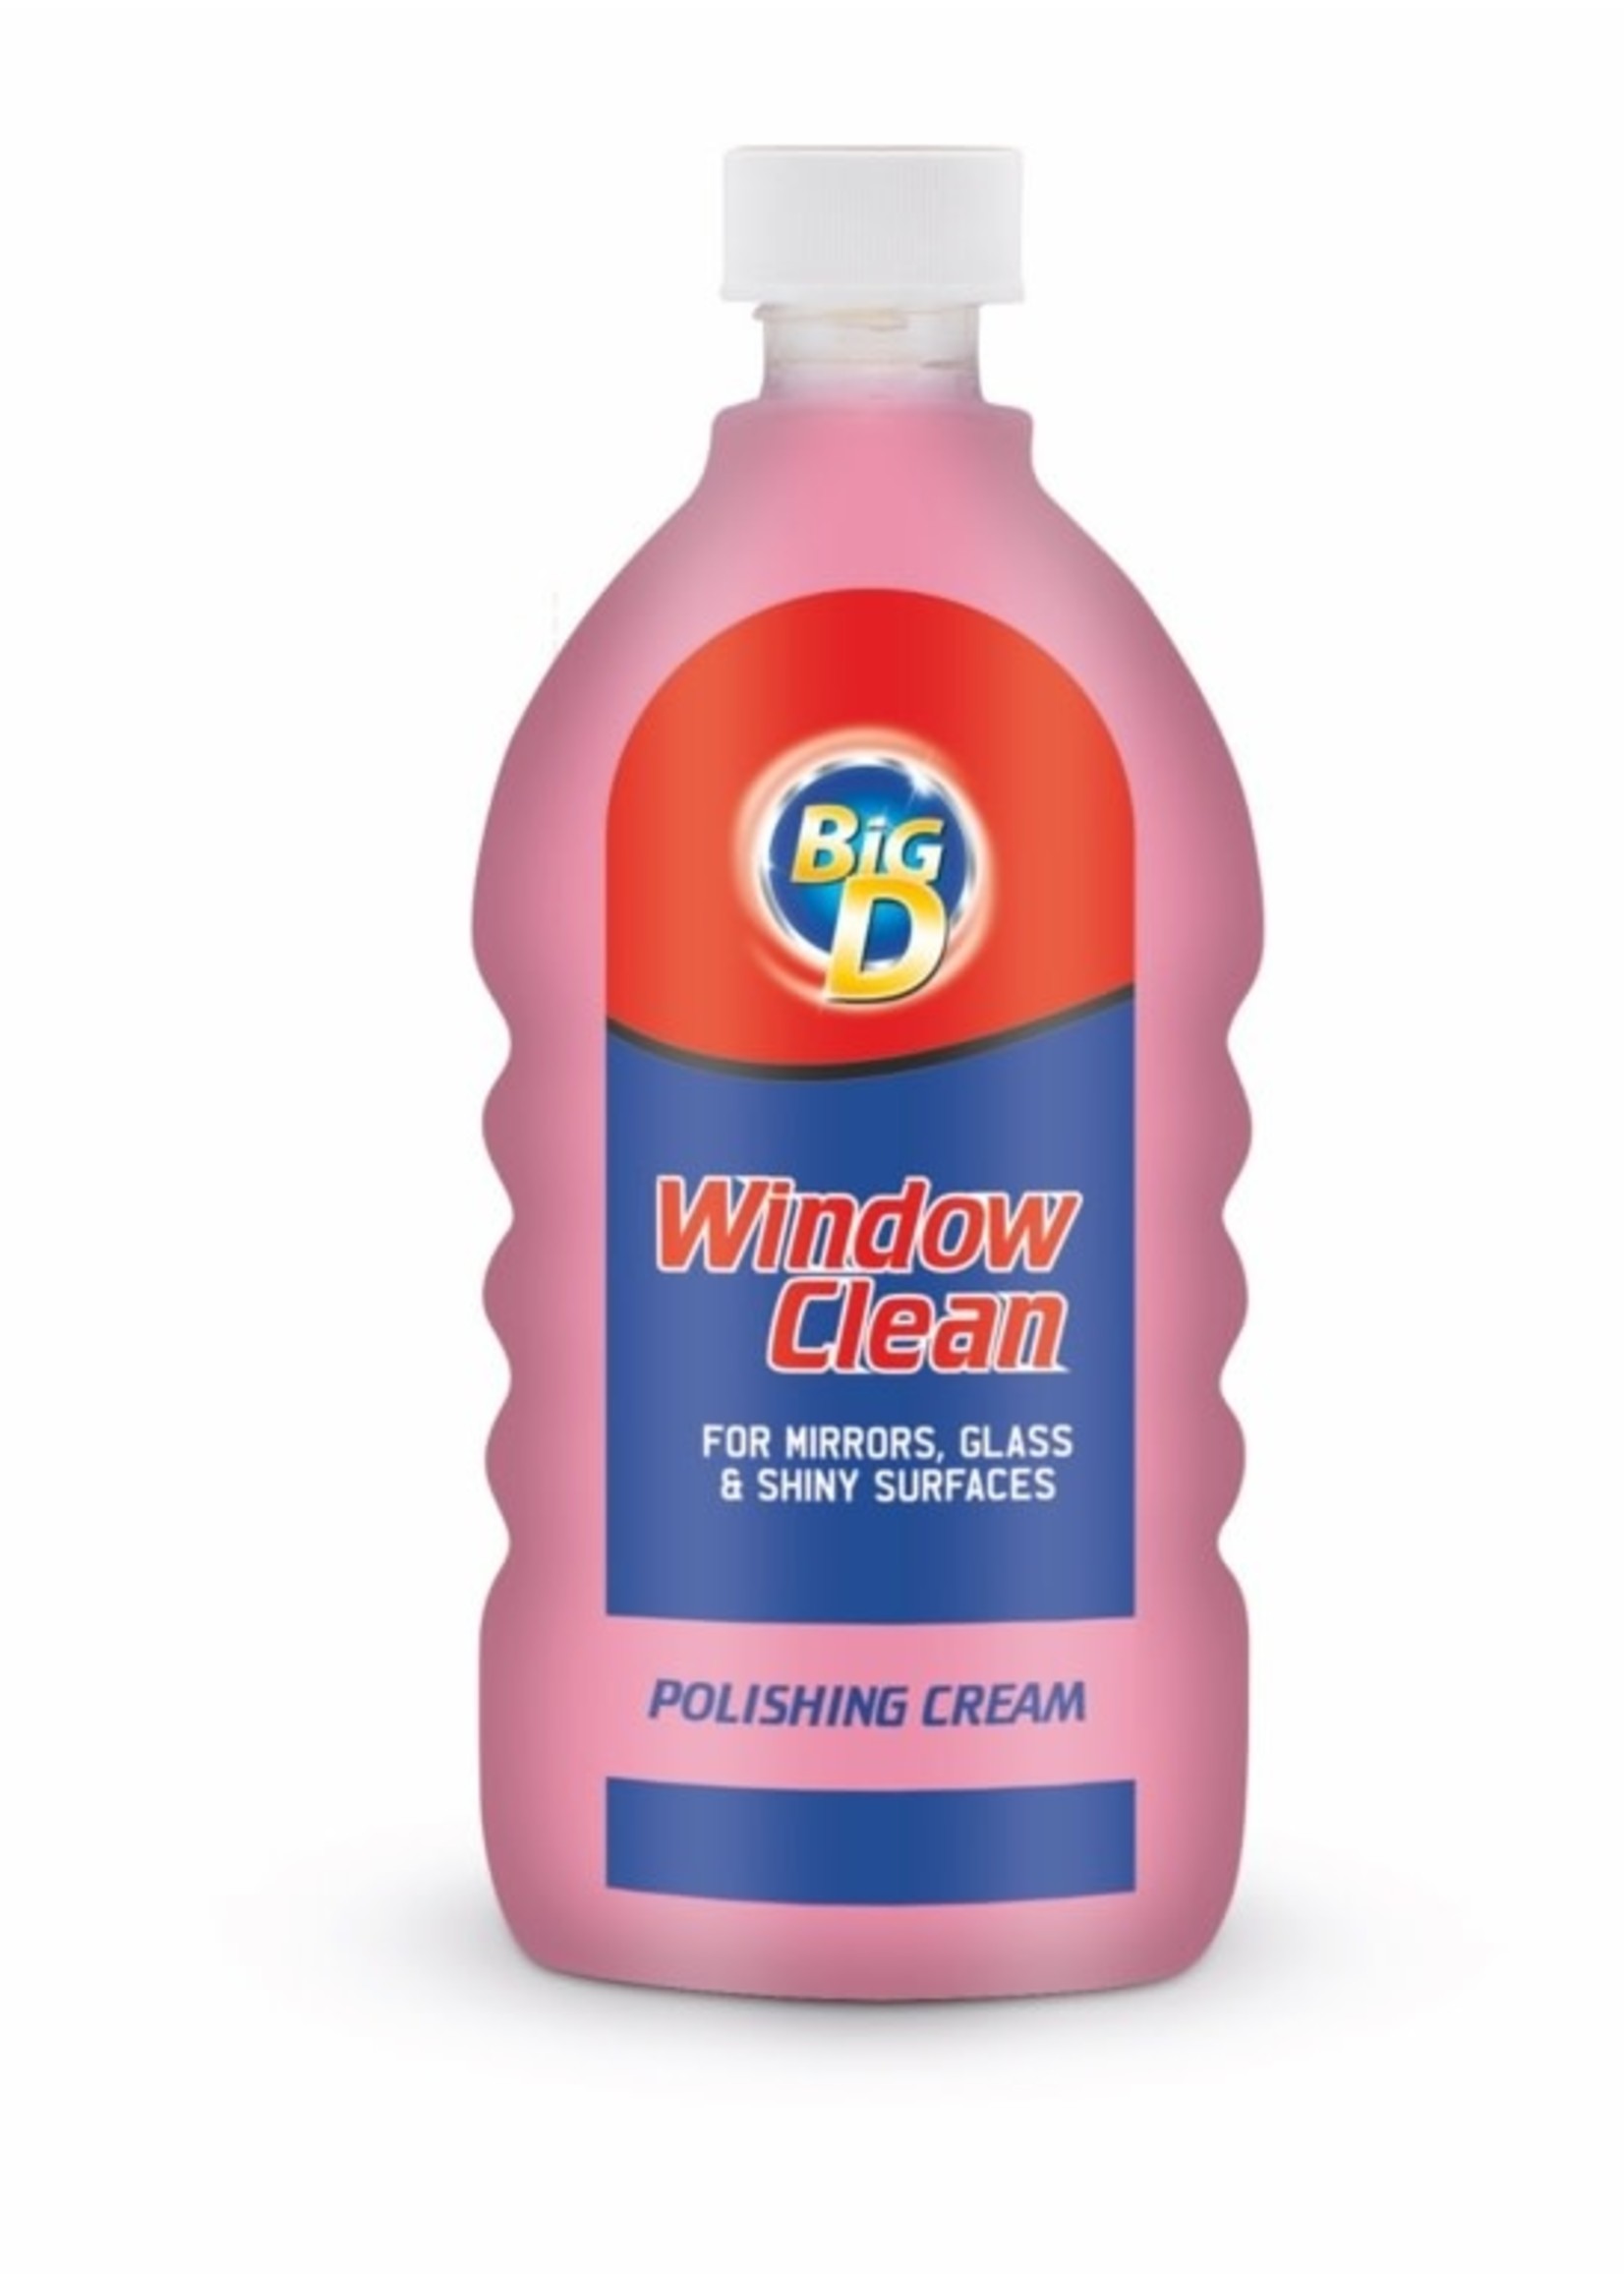 Big D Window Clean Cream 500ml